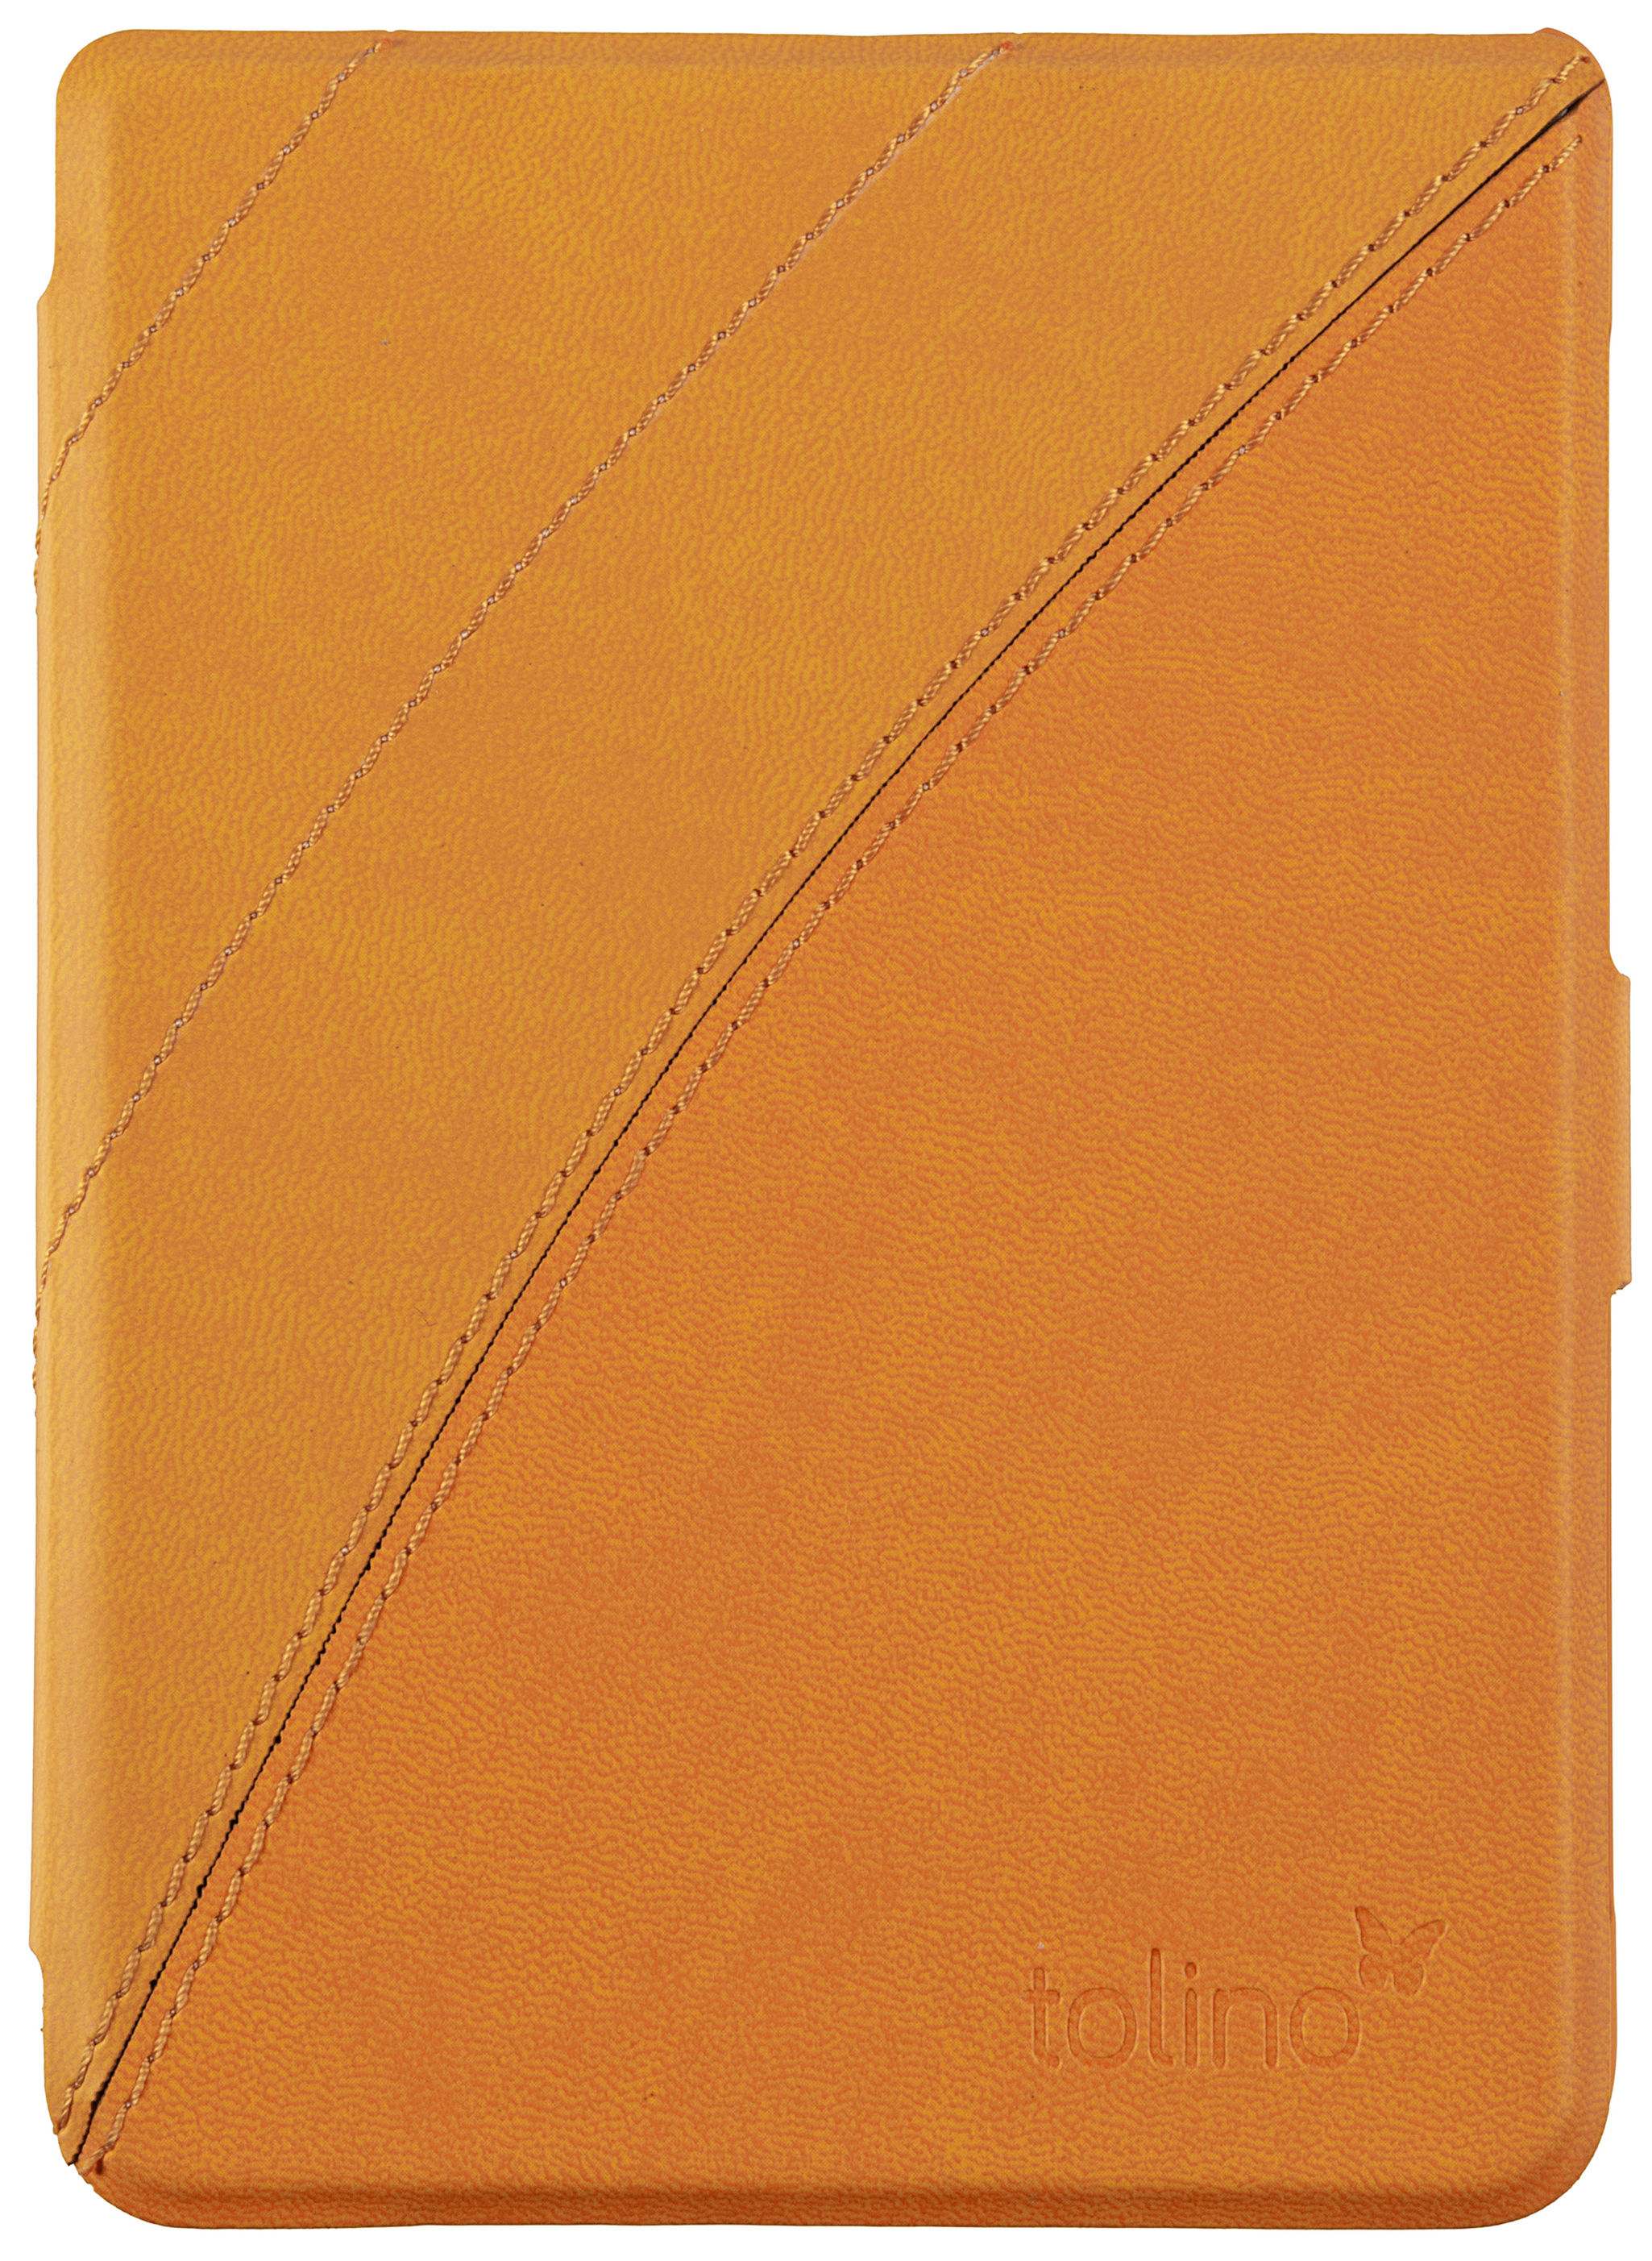 tolino shine 3, Schutztasche in Lederoptik Farbe:gelb Schmetterling |  Weltbild.de